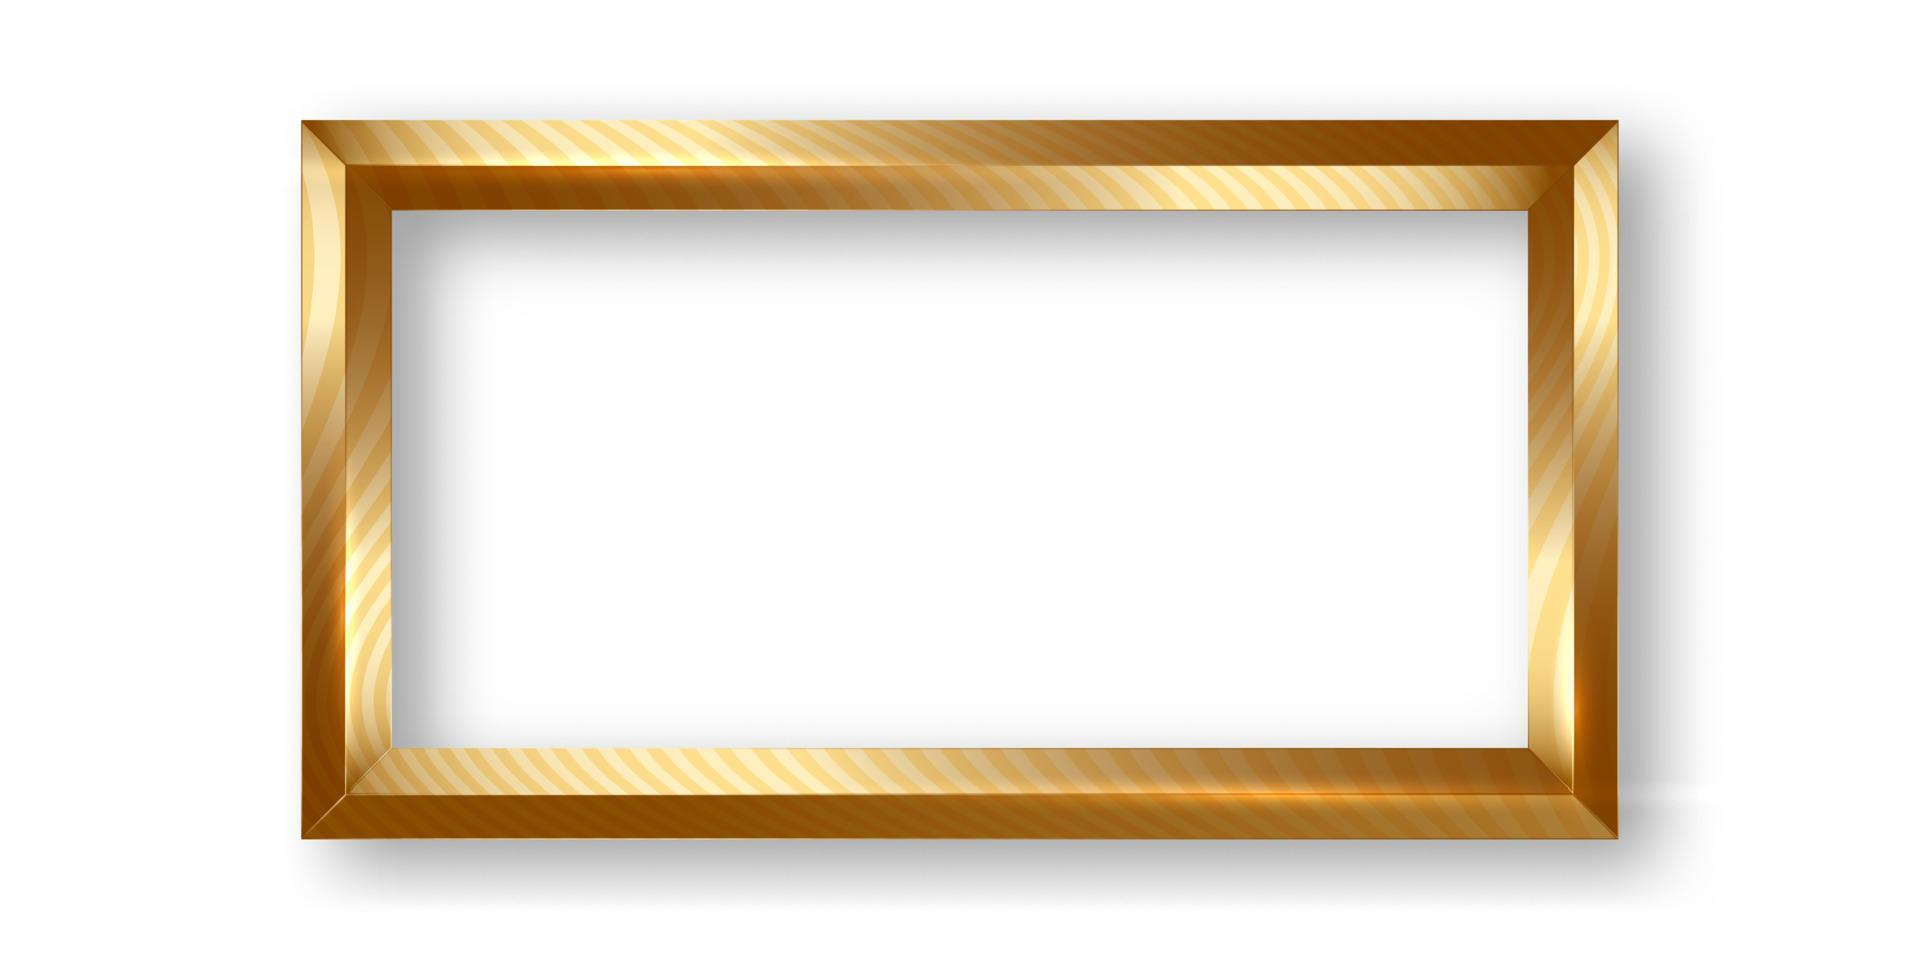 marco rectangular en madera dorada, marco de imagen dorado adornado a rayas, ilustración vectorial de borde de lujo dorado clásico aislado en fondo blanco vector